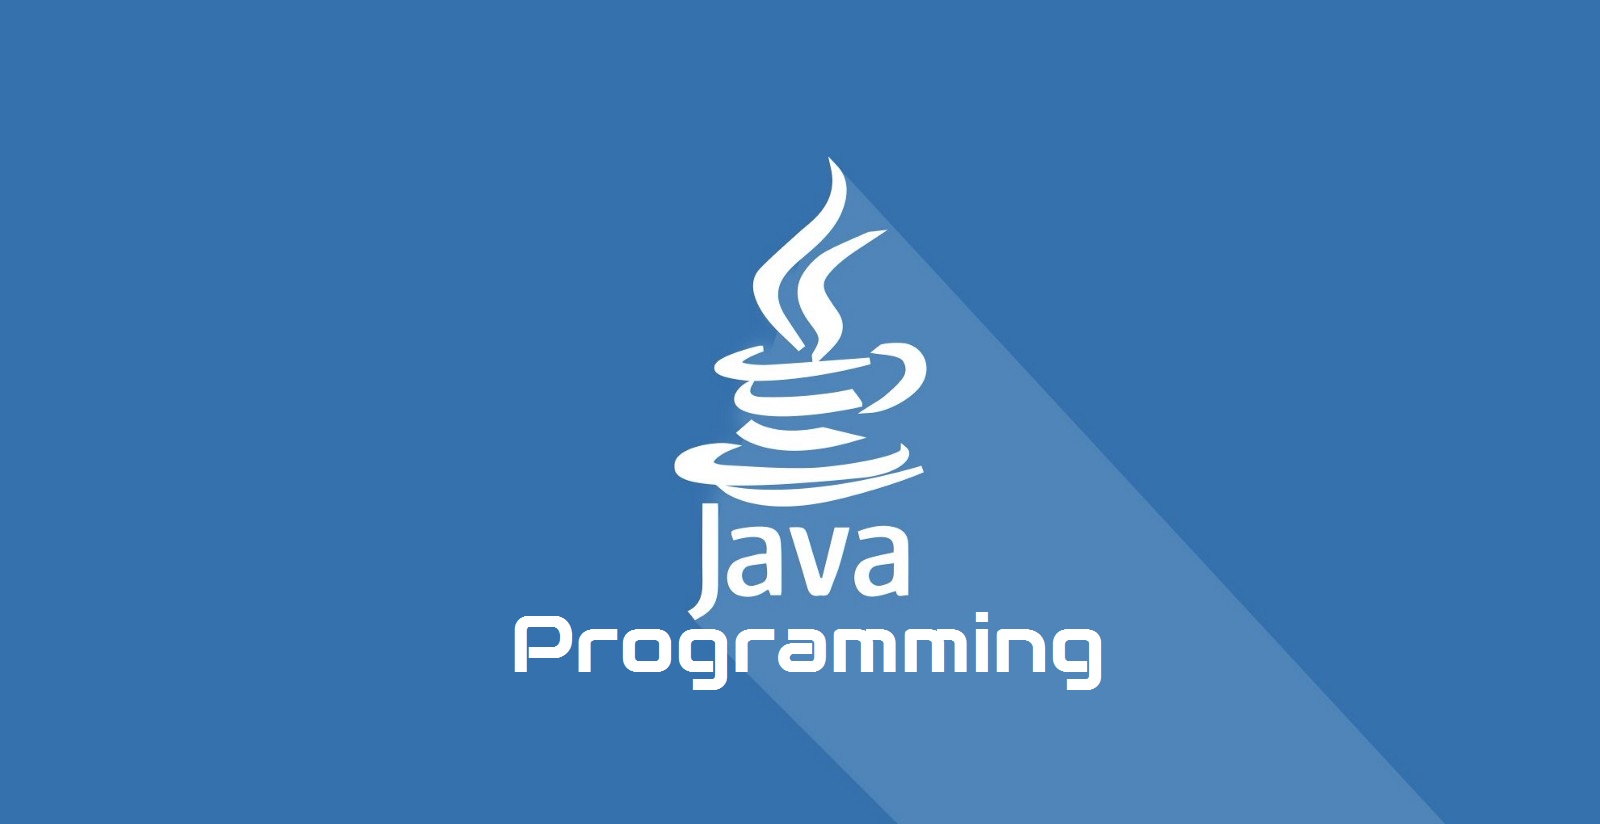 programming languages, programming skills